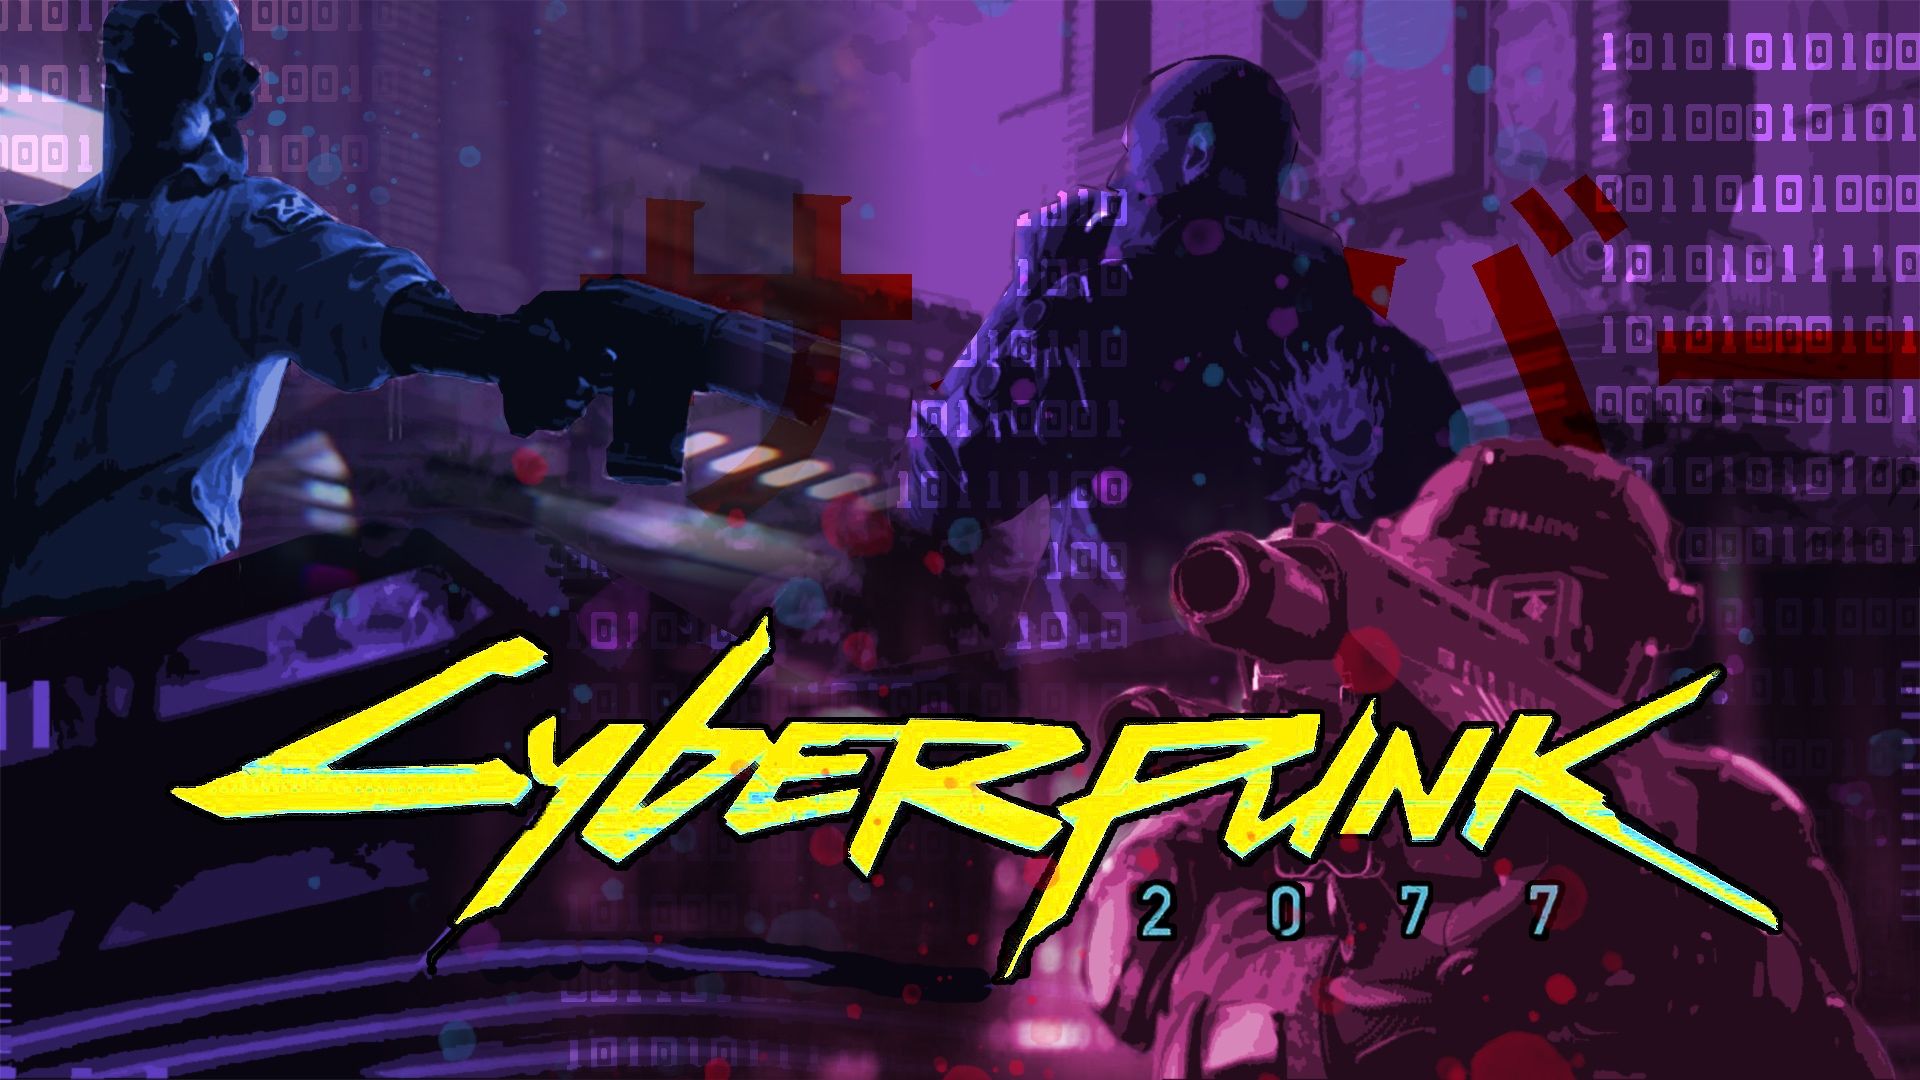 Cyberpunk 2077 New Game 4k Wallpaper,HD Games Wallpapers,4k